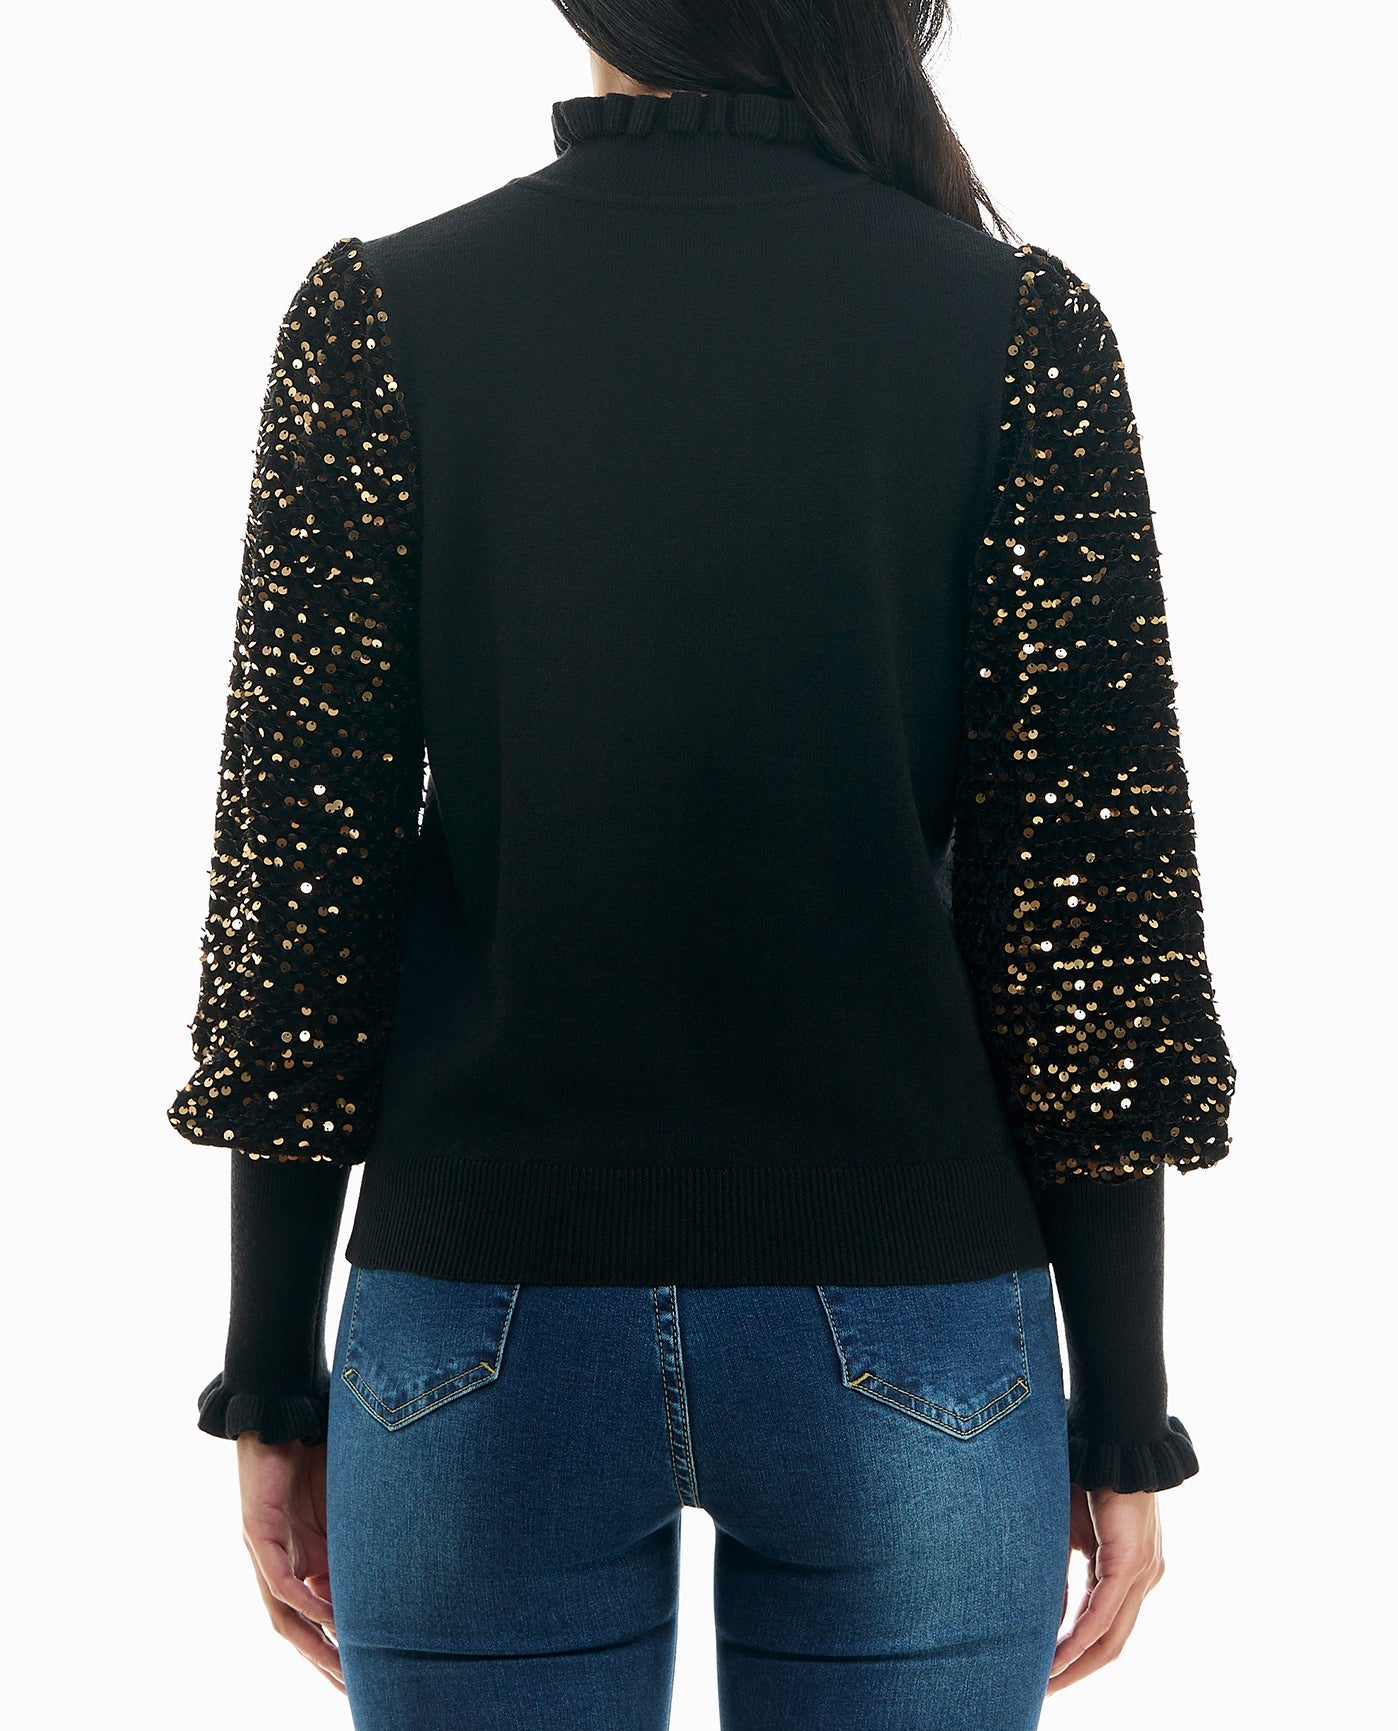 Sequin Sweater - Black/Gold